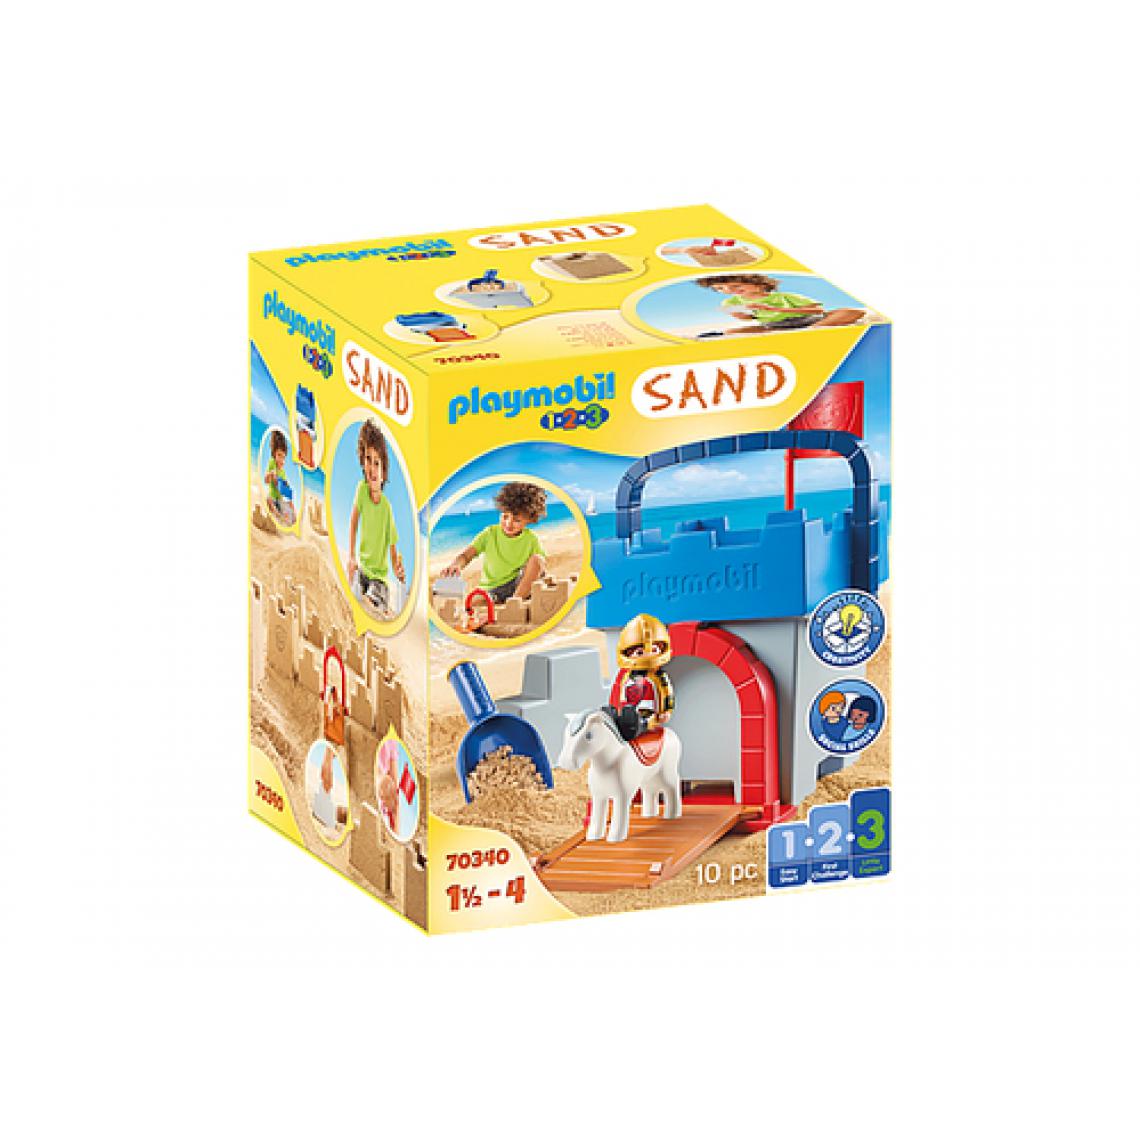 Playmobil - 70340 Château chevalier des sables, Playmobil 1.2.3 Sand - Playmobil